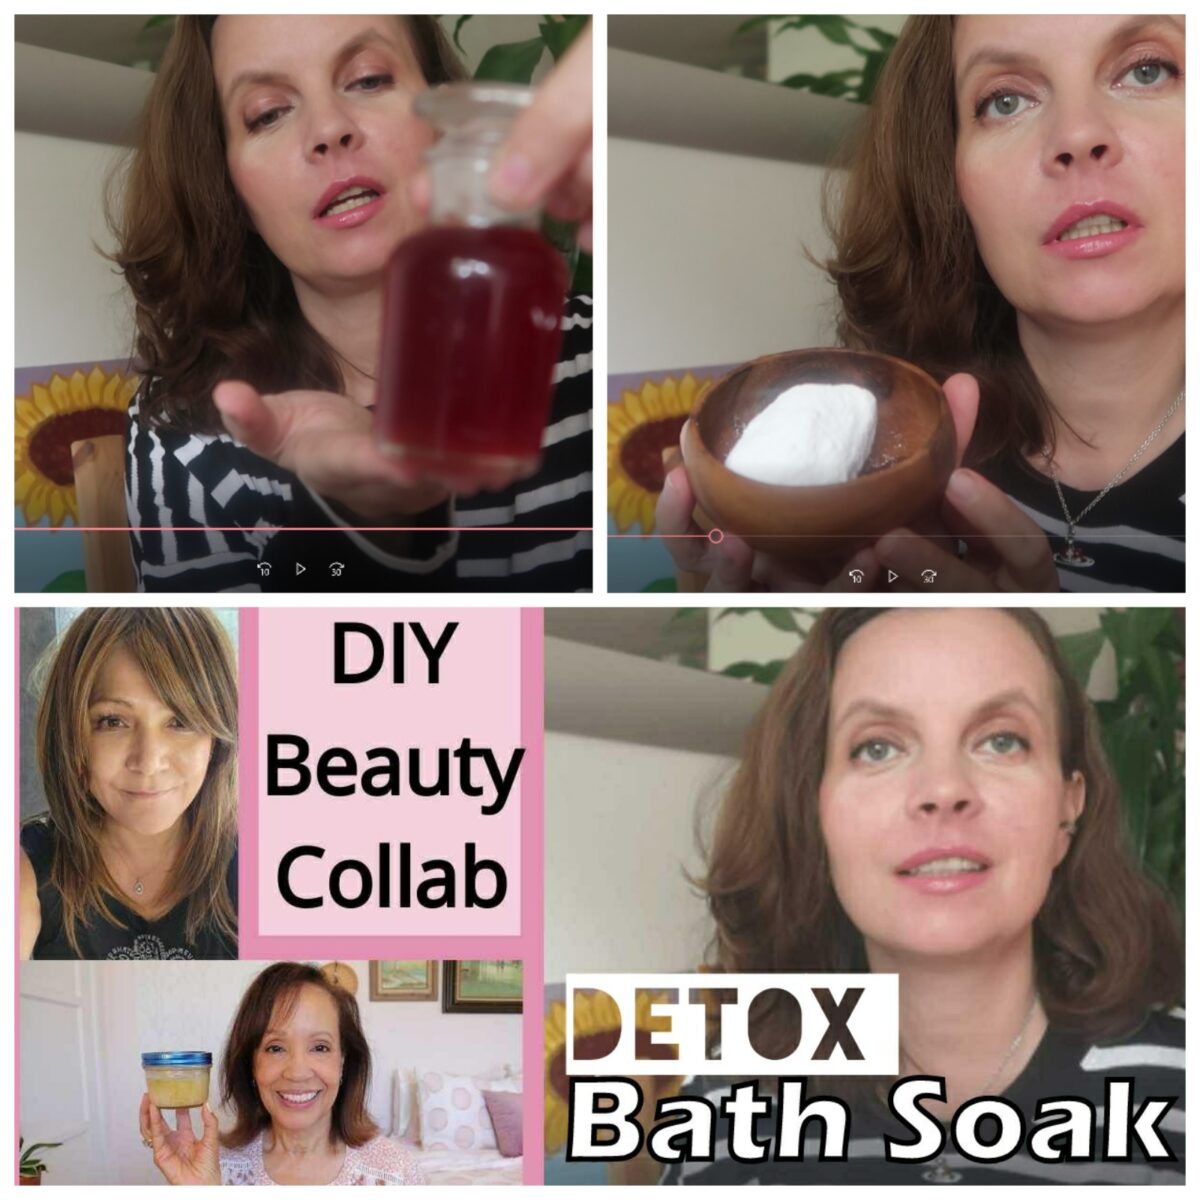 DIY Detox Bath Recipe – Youtube collaboration